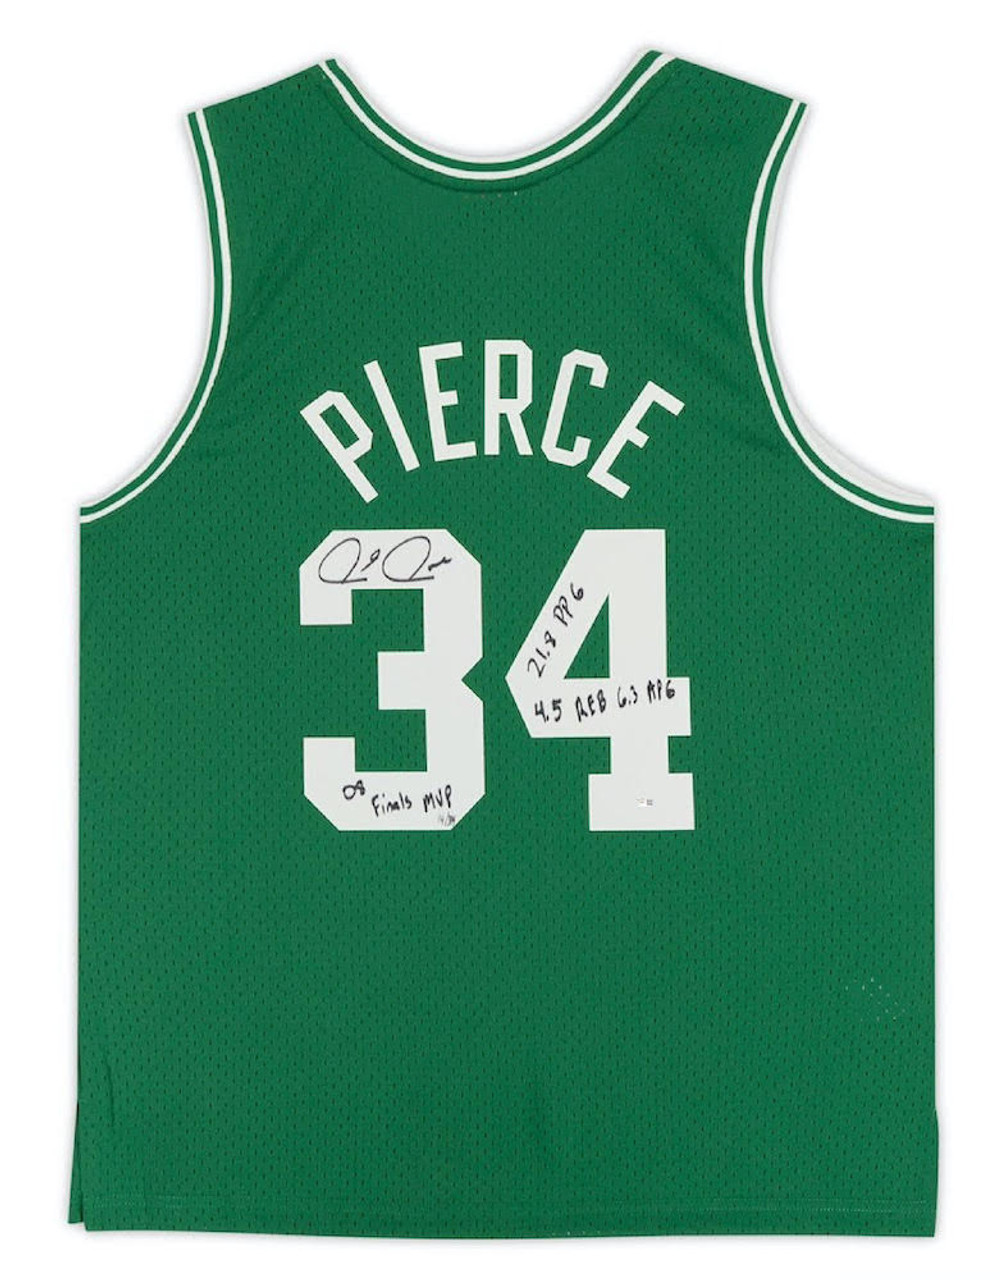 Paul Pierce Saved the Celtics